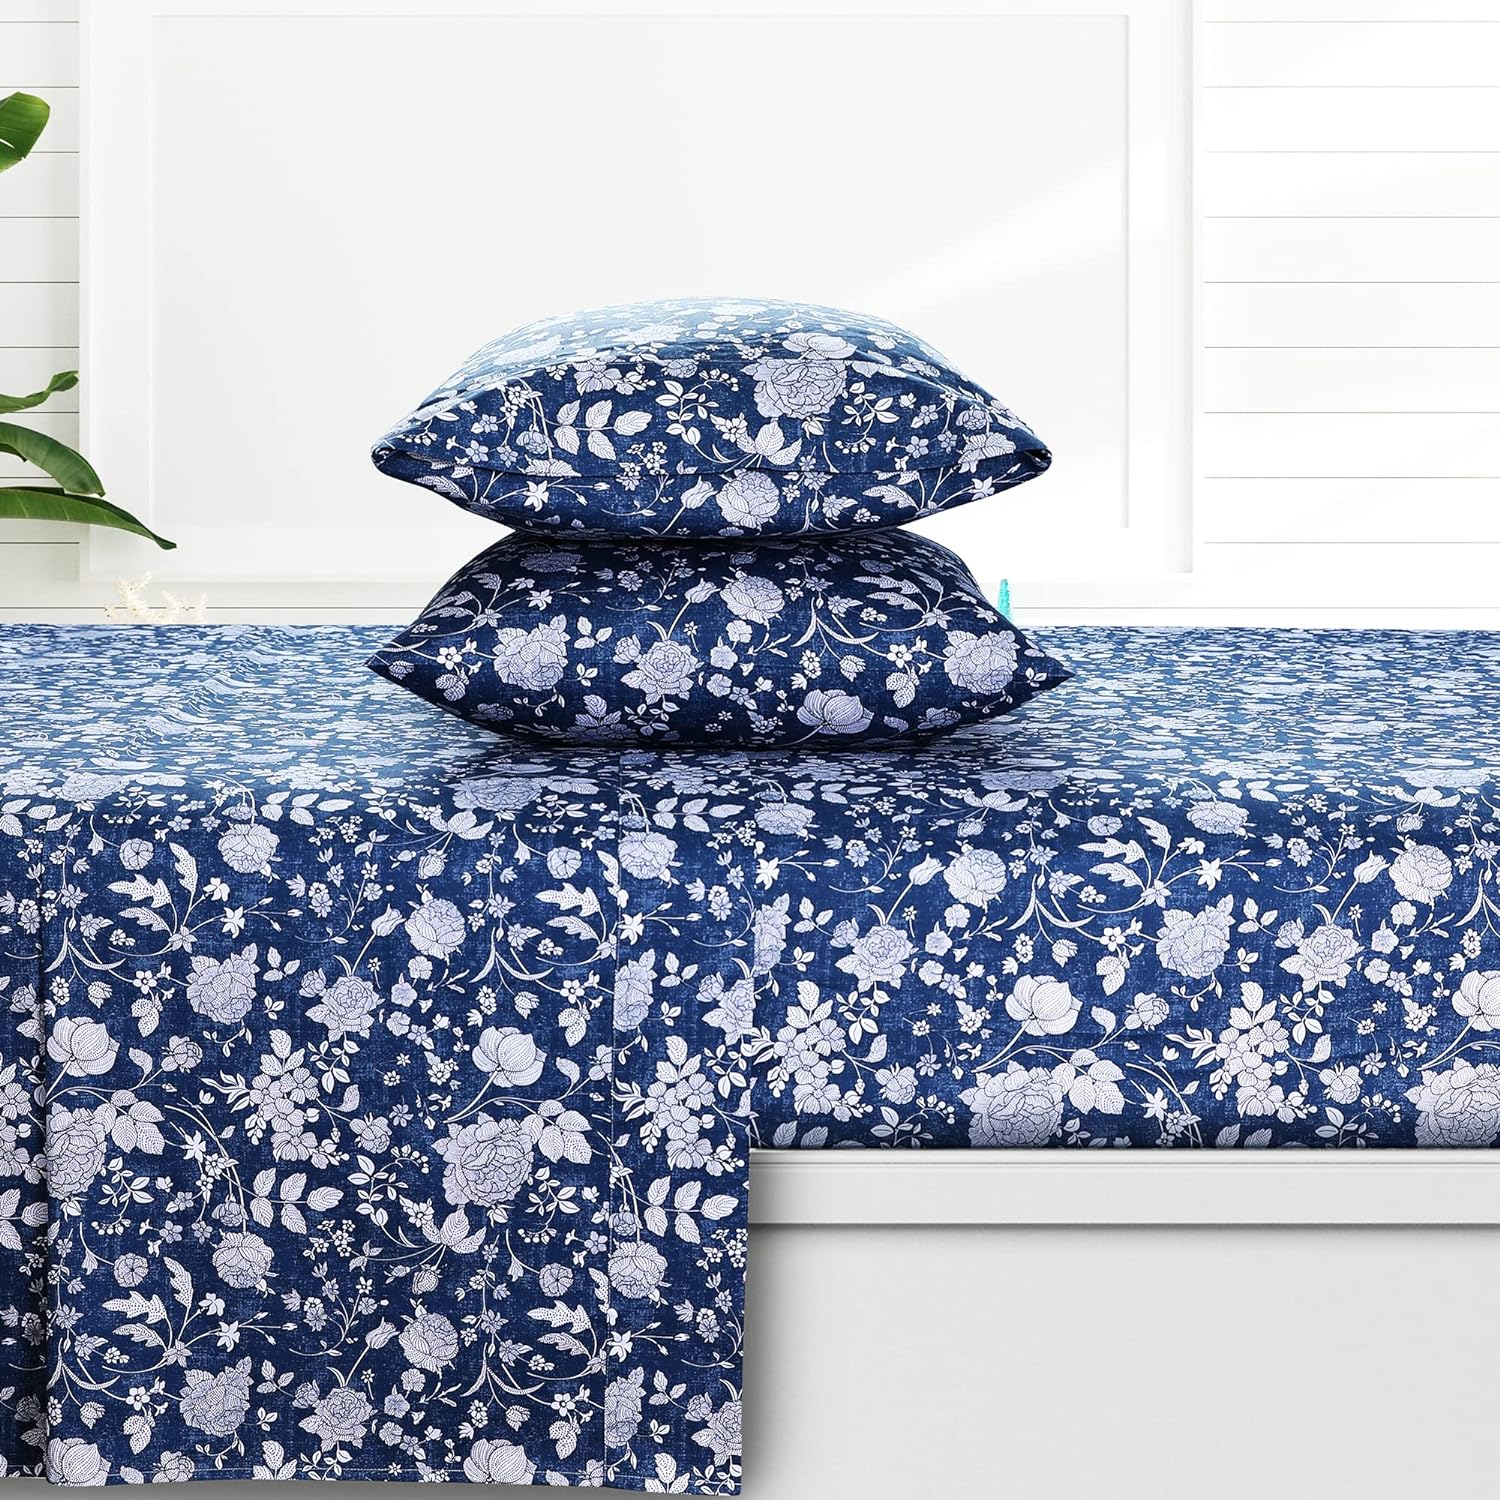 Kate 300 Thread Count Organic Cotton Deep Pocket Bed Sheet Set, Fits up to 19 inch Mattress - Queen, Dark Blue